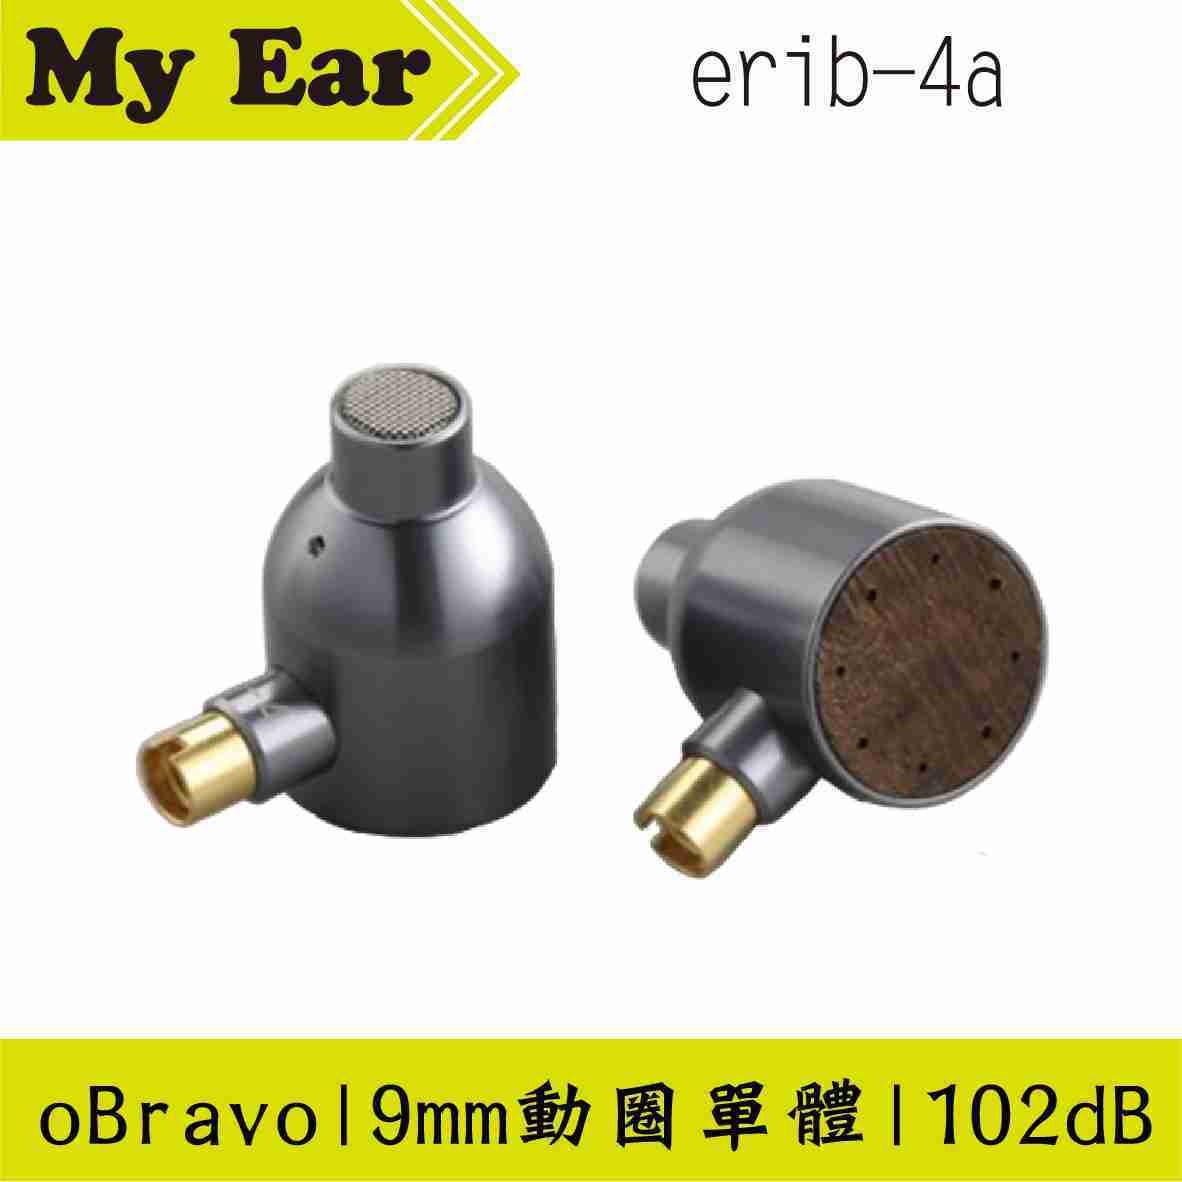 oBravo erib-4a 平面振膜 高音 耳道式耳機 | My Ear耳機專門店